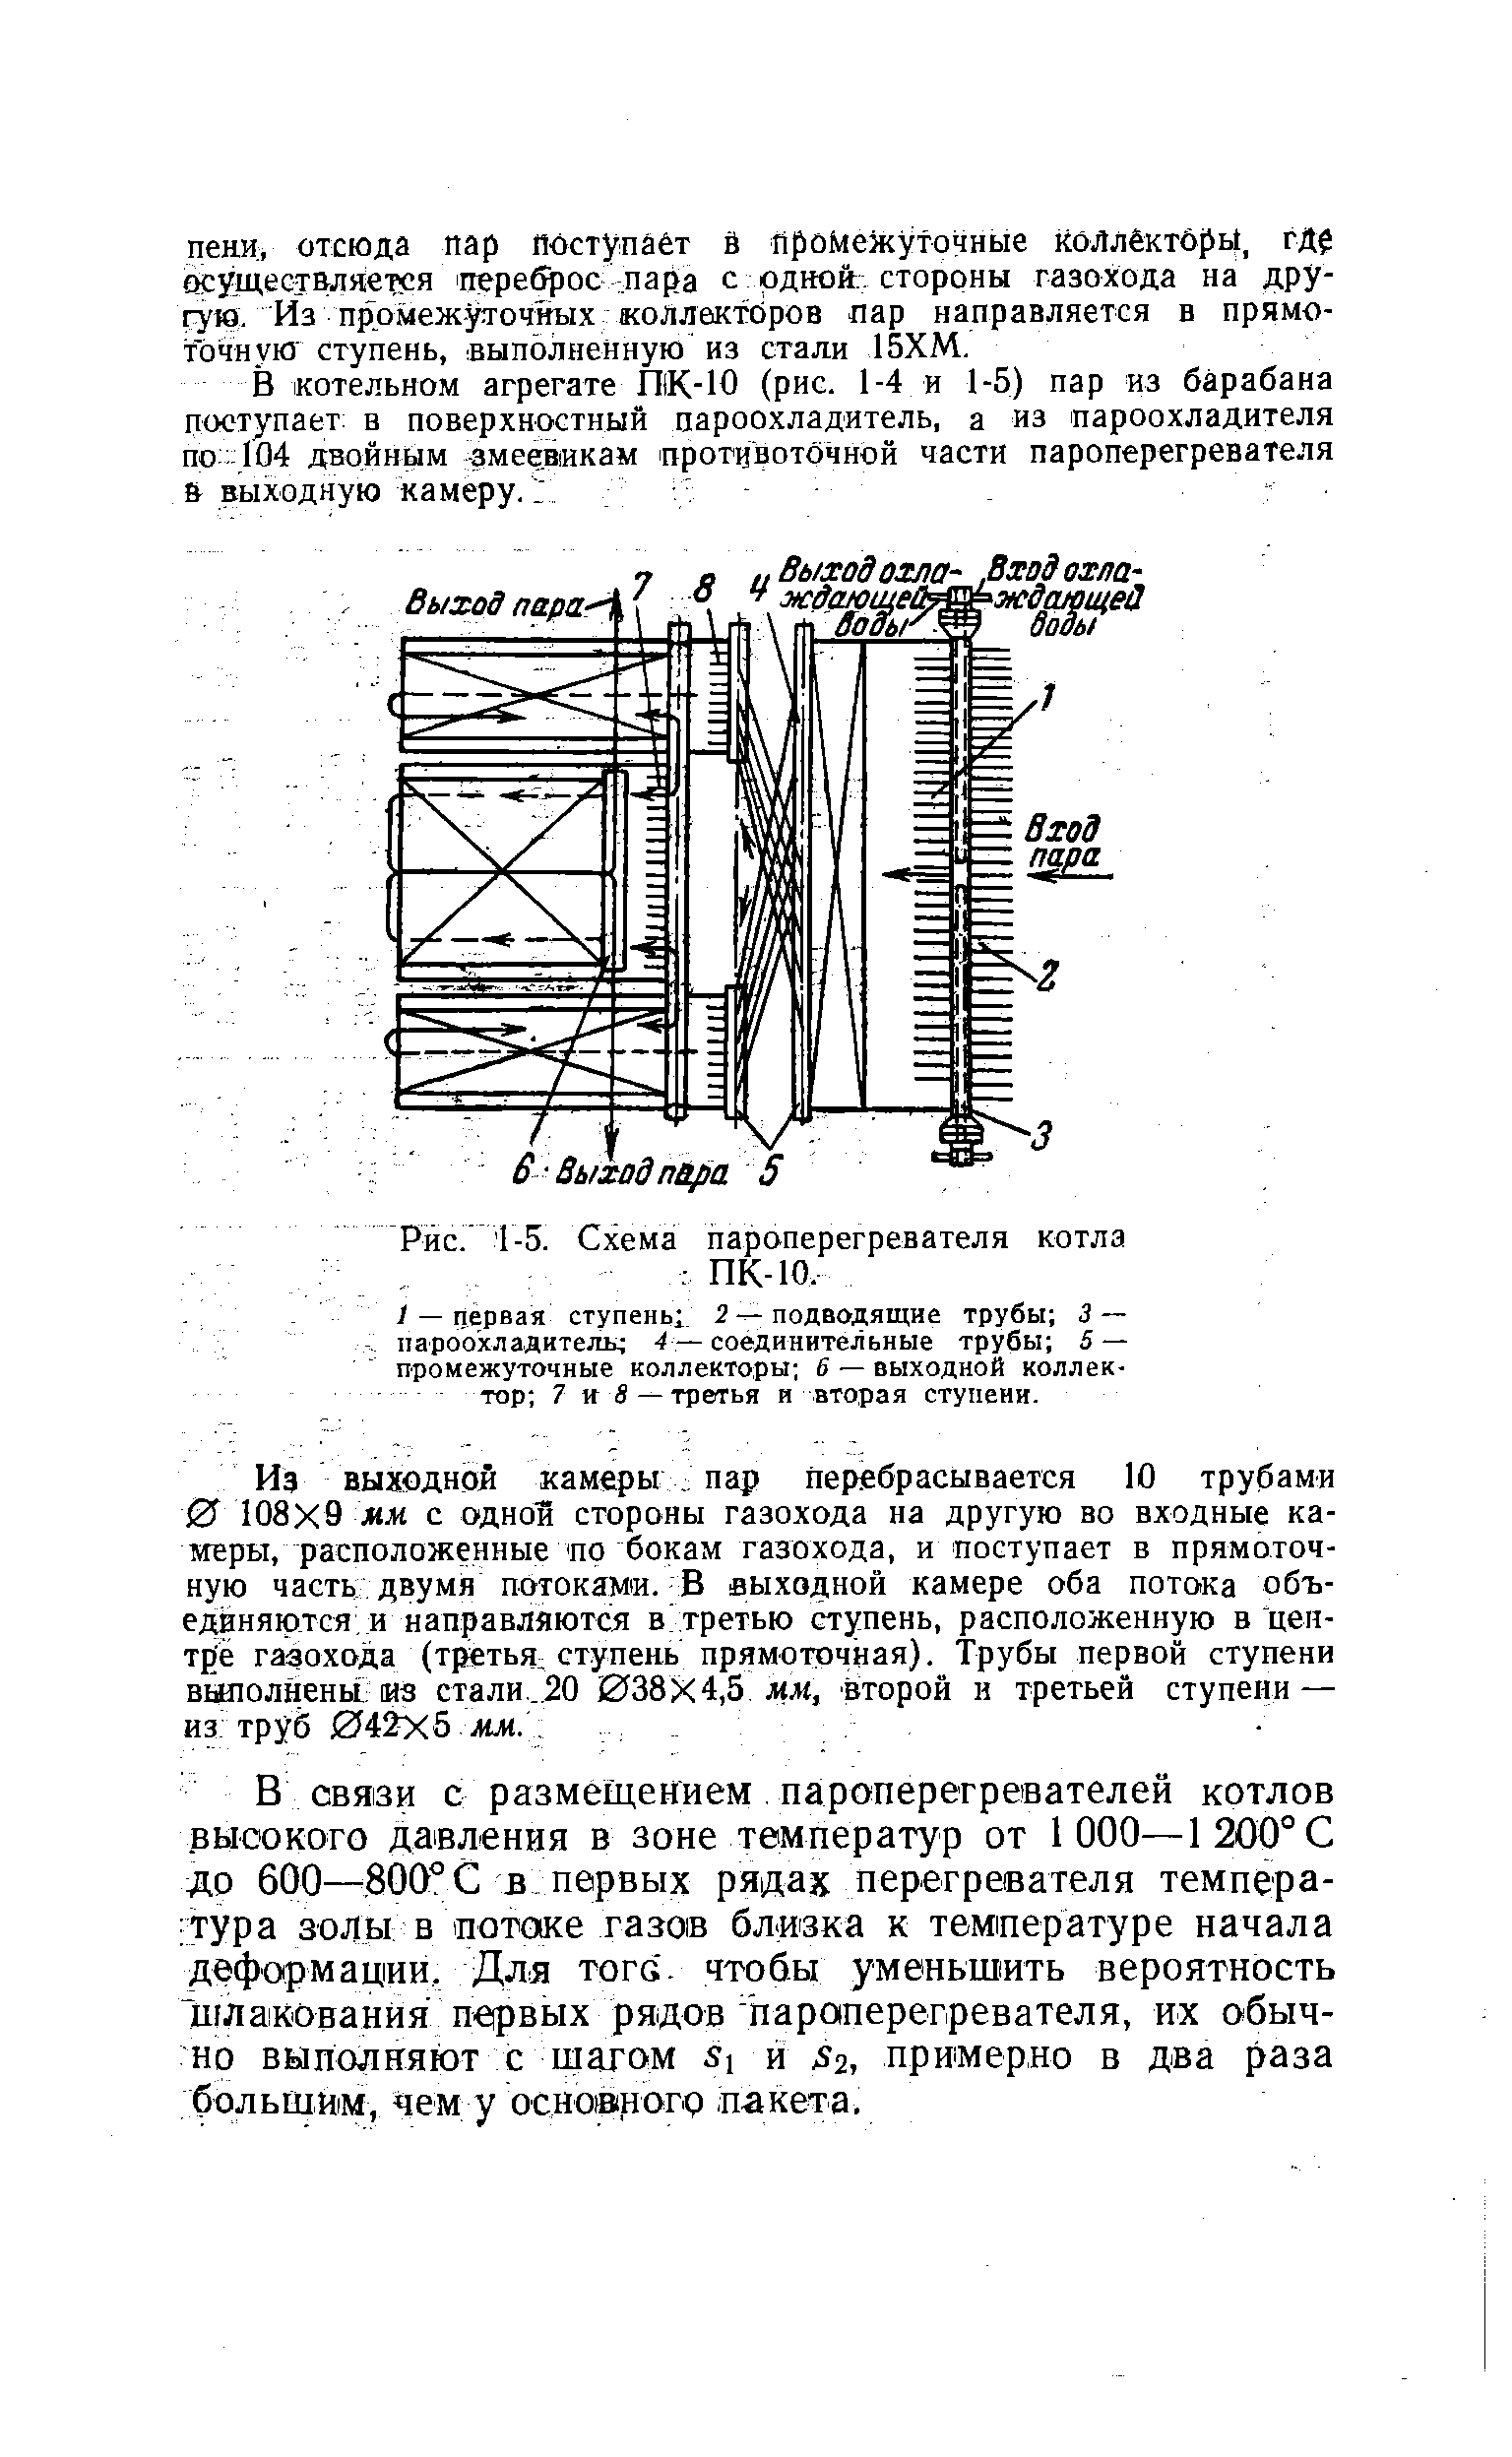 Рис. 1-5. Схема пароперегревателя котла, ПК-10.
